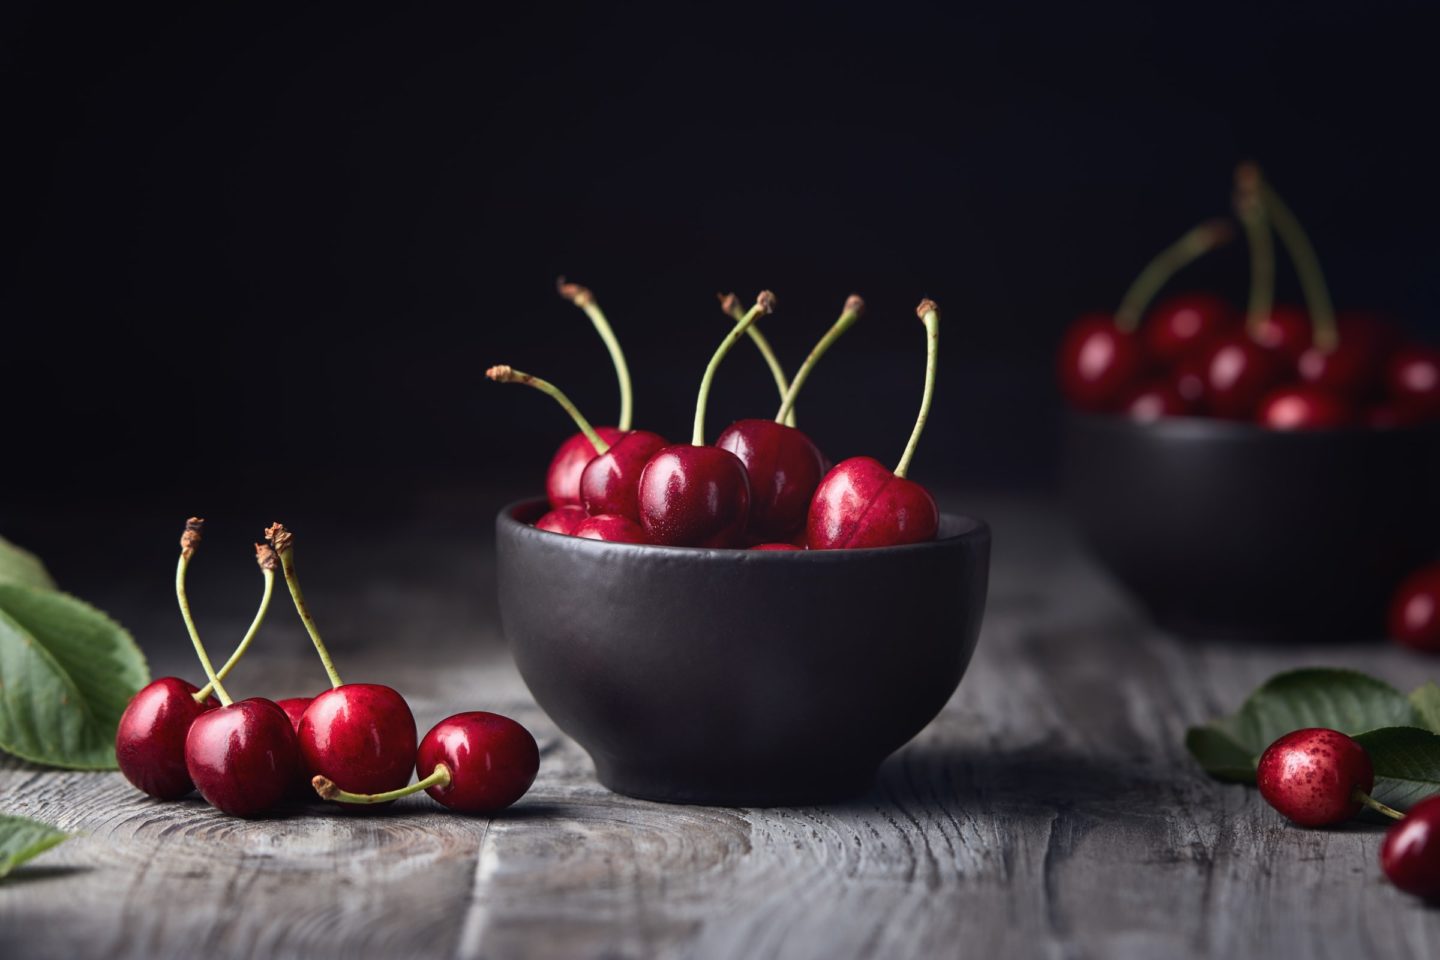 Tart Red Cherry Antioxidants